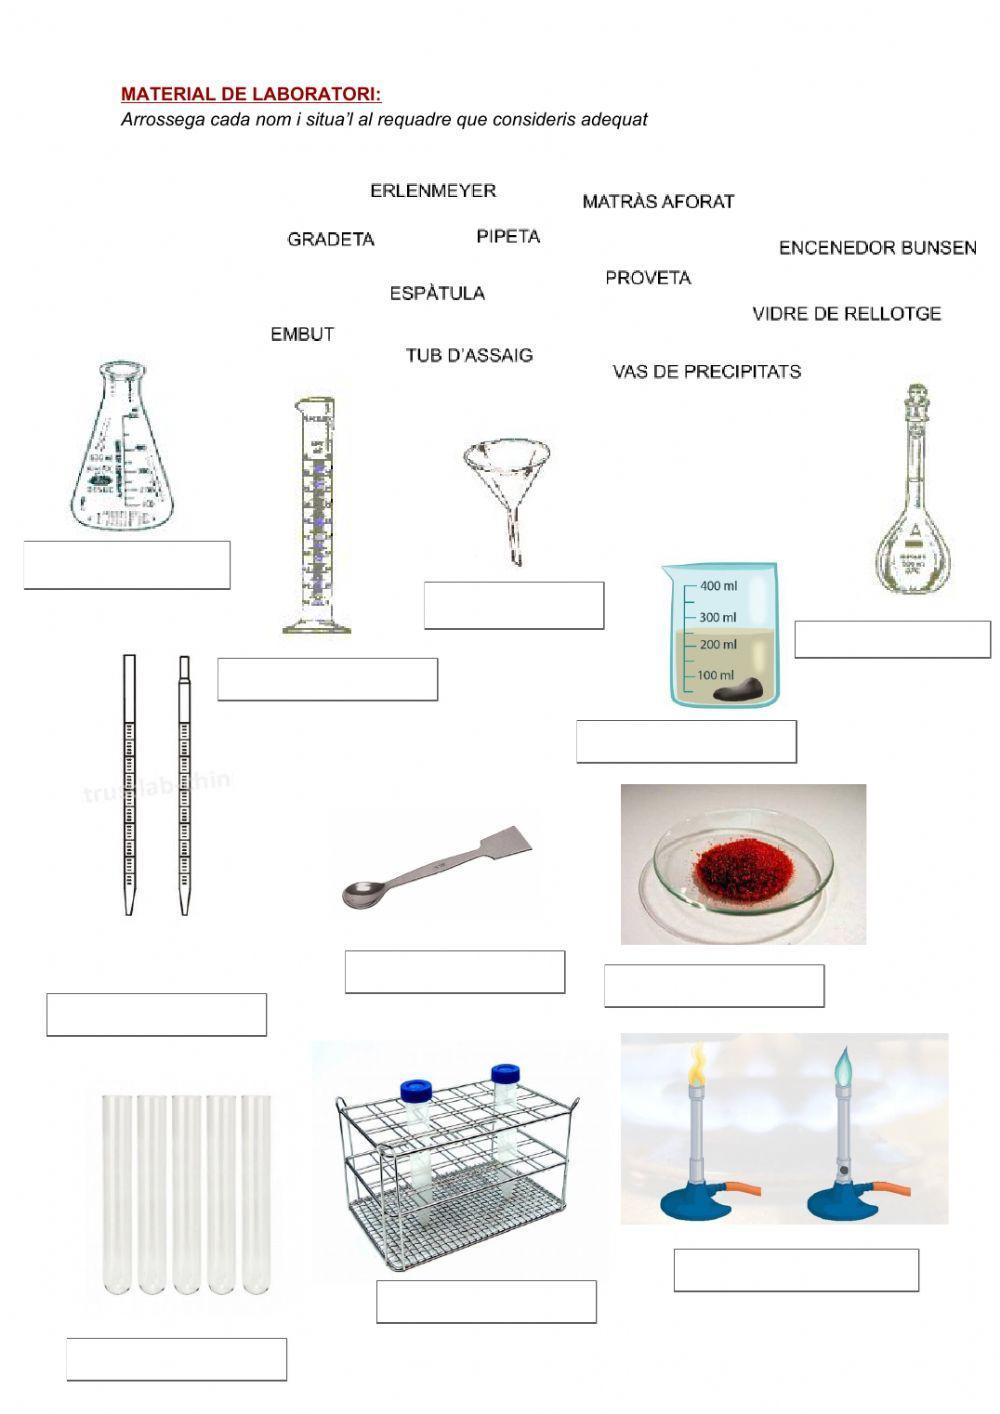 FQ-Material laboratori worksheet | Live Worksheets